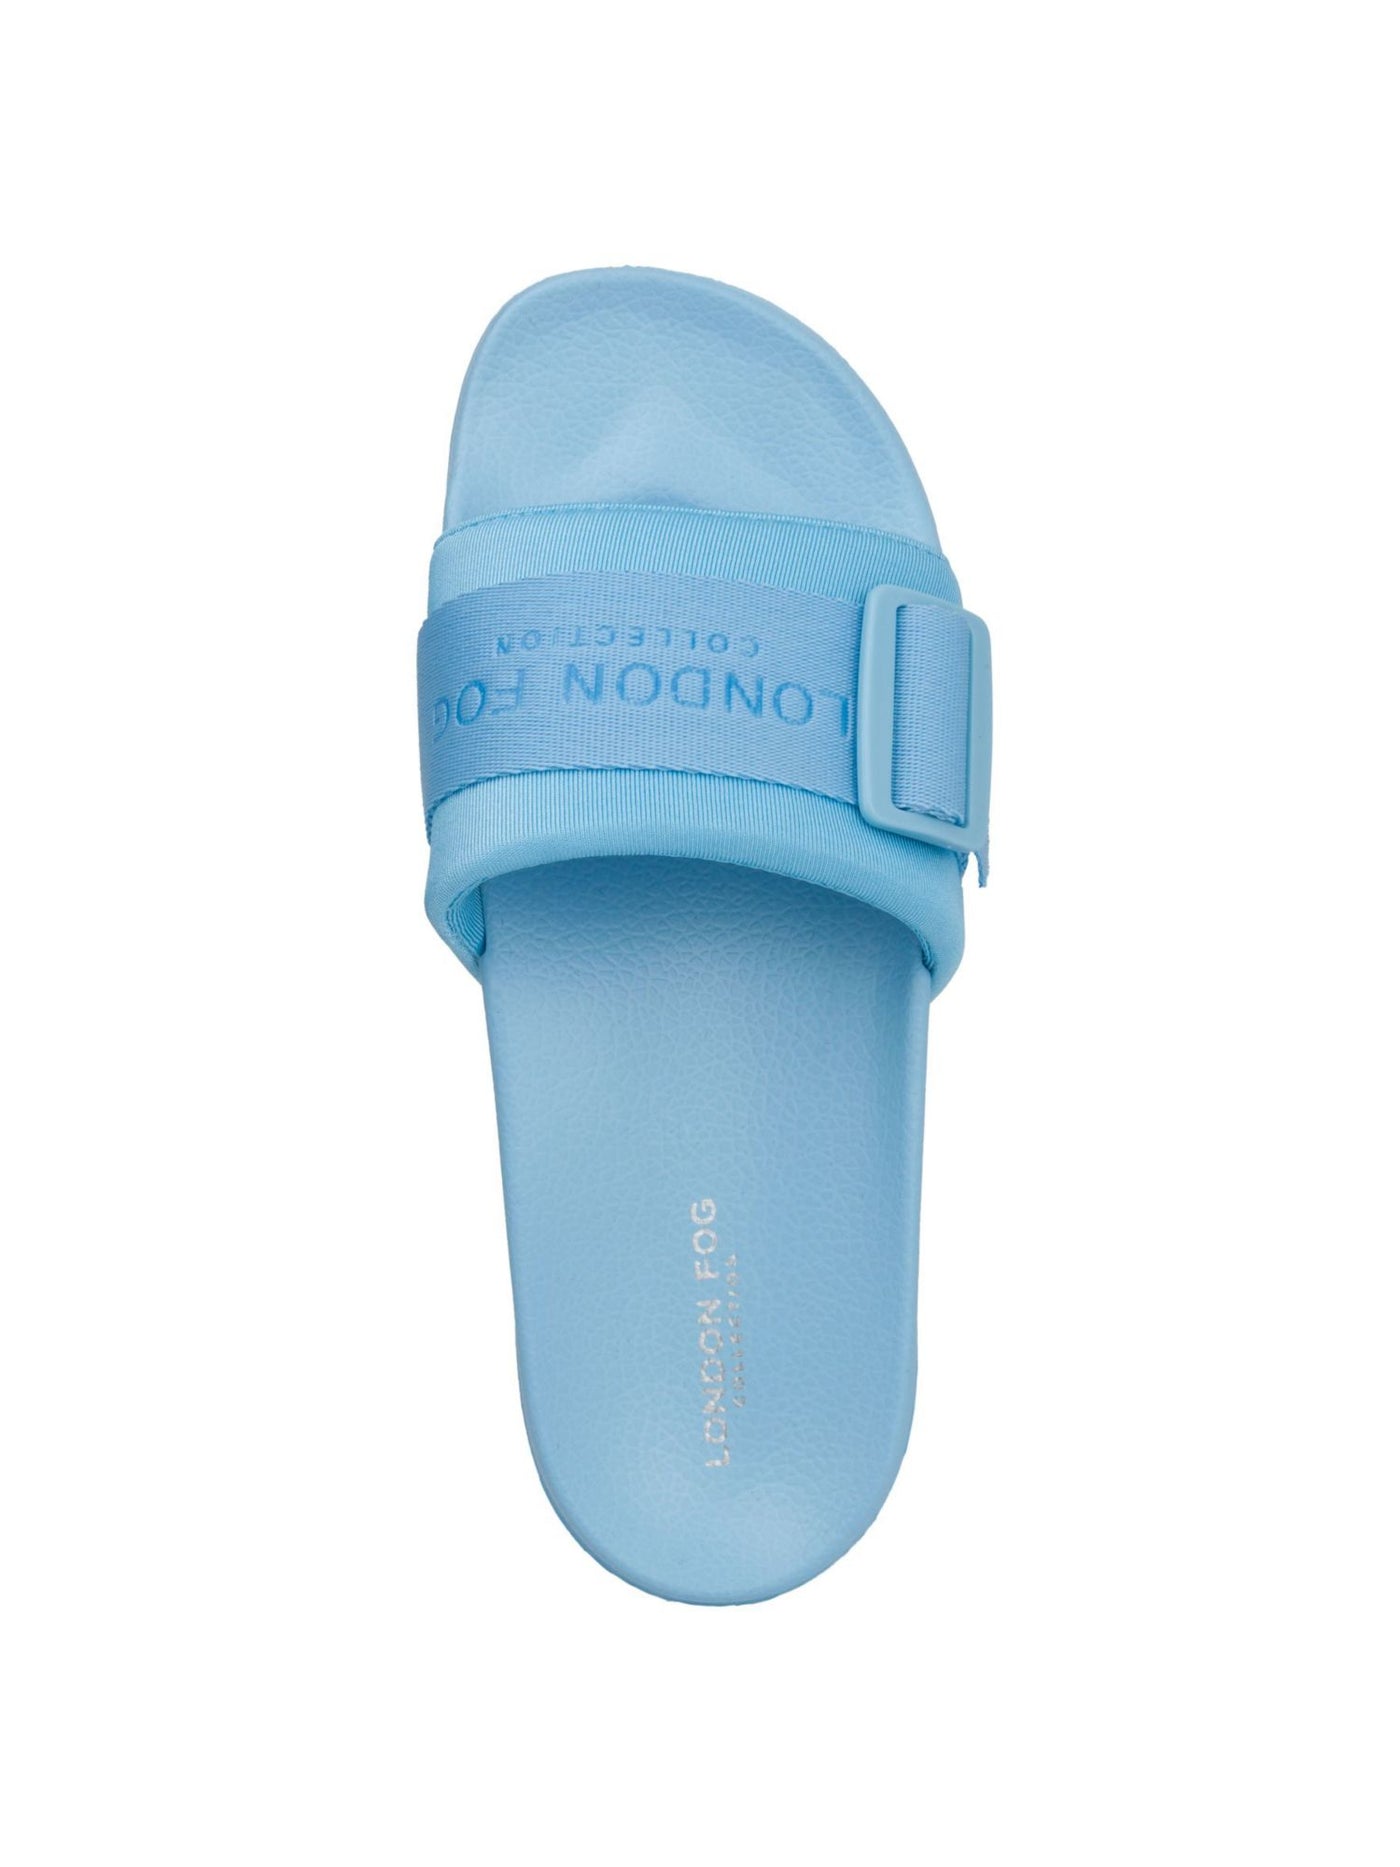 LONDON FOG COLLECTION Womens Blue Buckle Accent Logo Skyden Round Toe Platform Slip On Slide Sandals 10 M